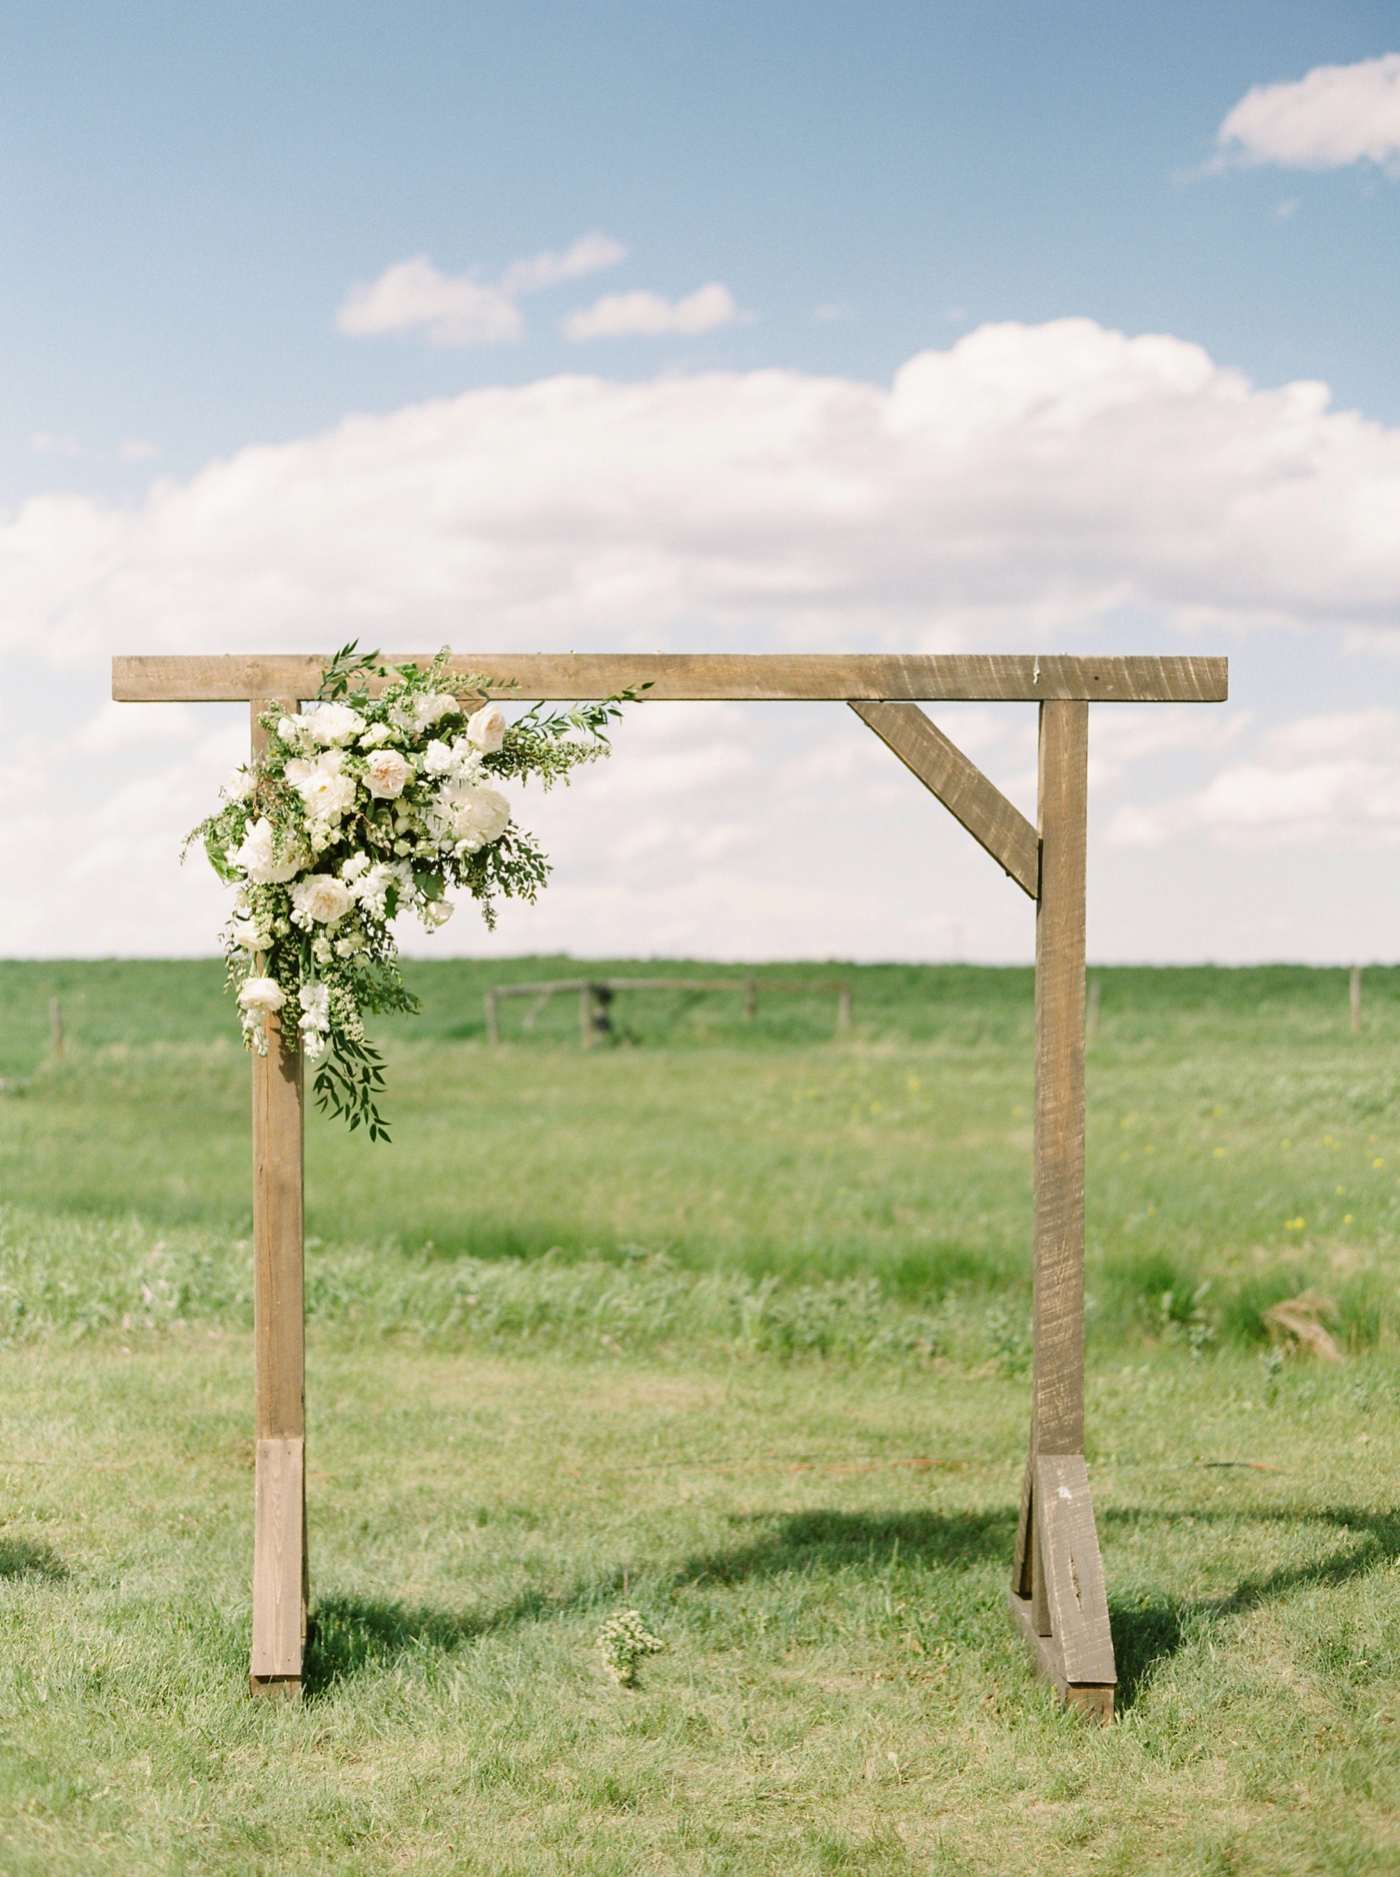 Calgary wedding photographers | The Gathered Farm Wedding | Justine milton fine art film photographer | outdoor farm wedding ceremony rustic arch structure